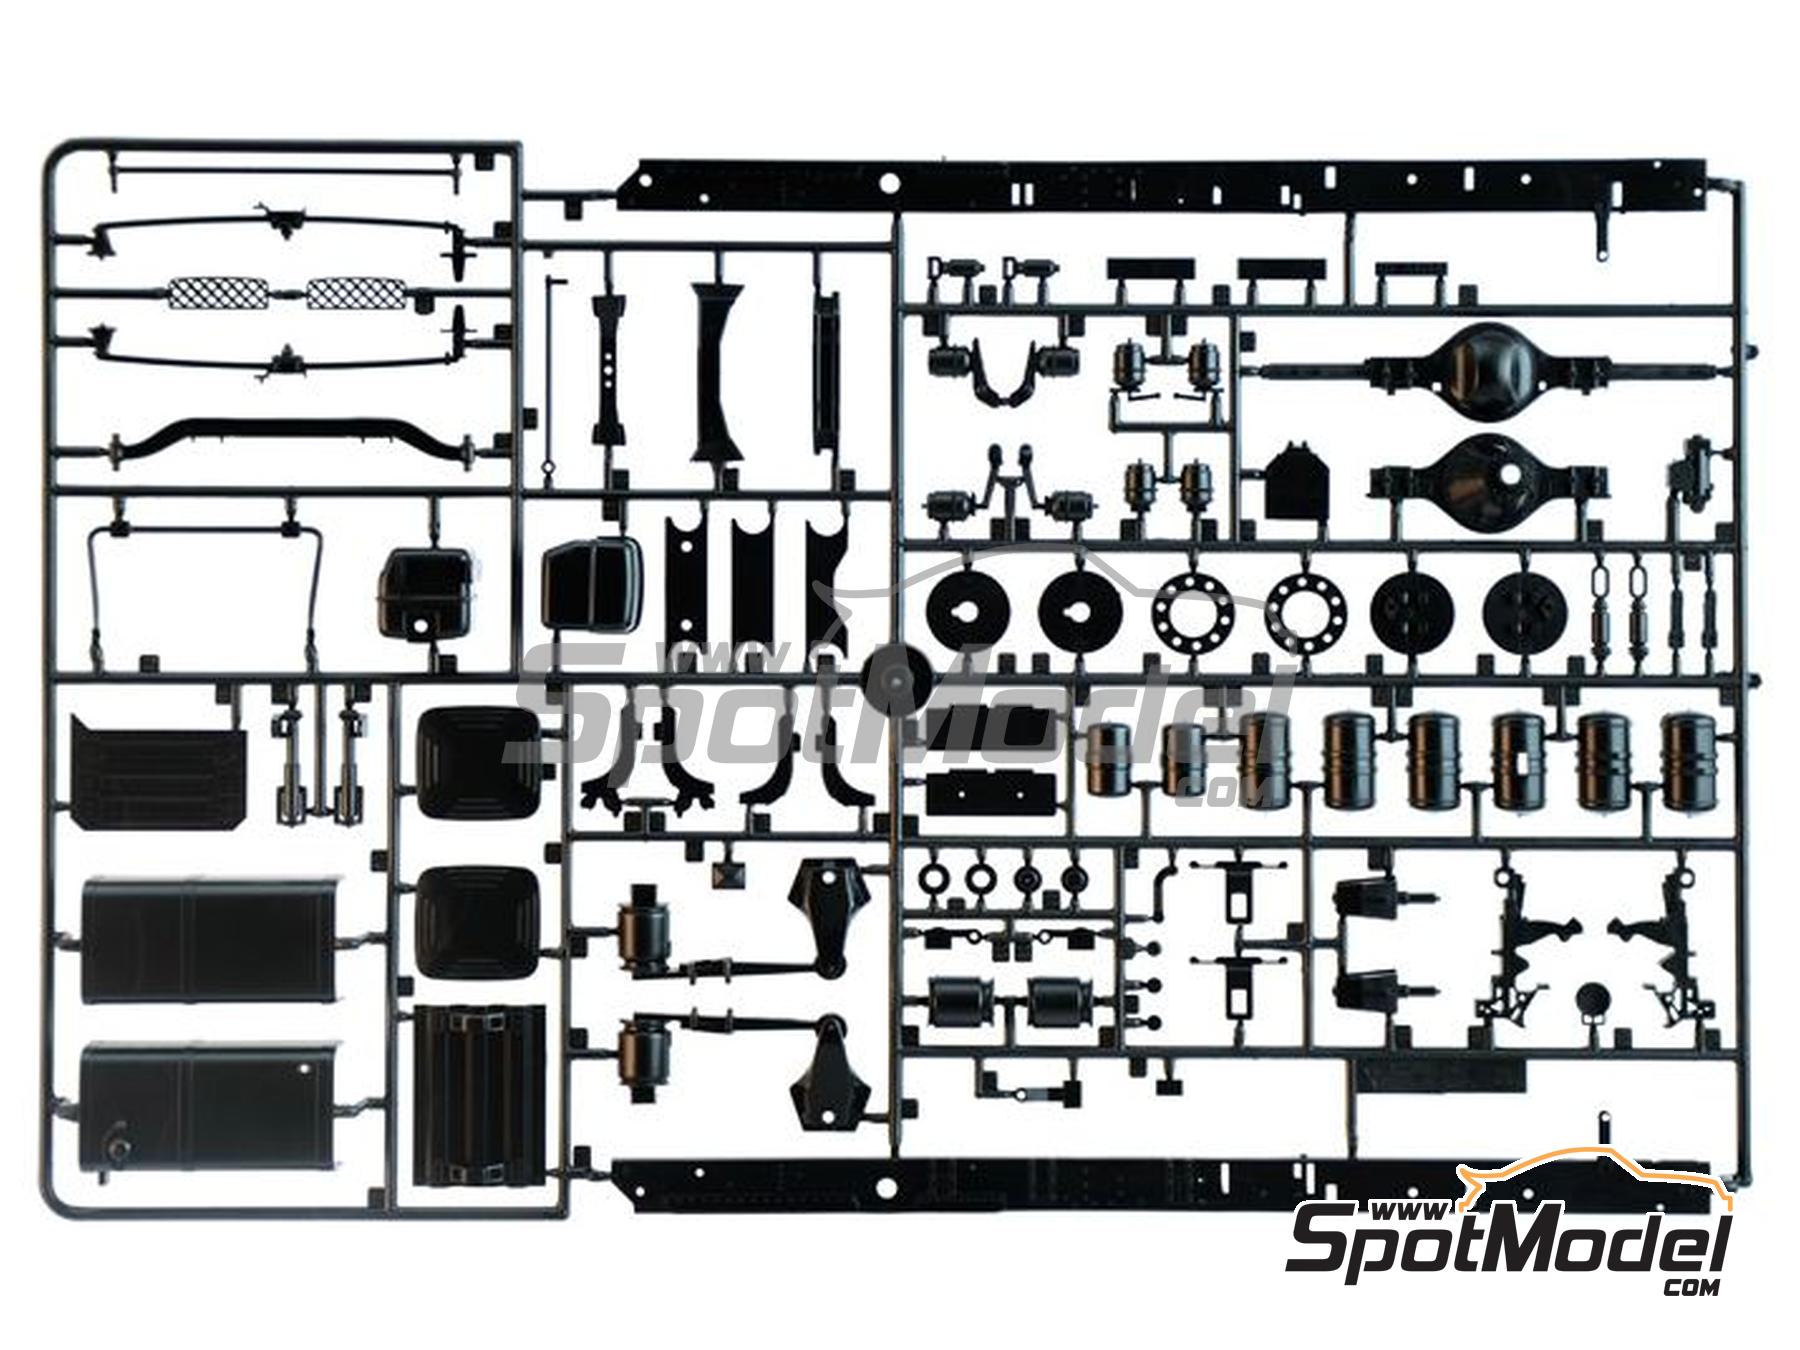 Accessoires set for the new Scania ( 3927 ) - Schaper Modelbouw